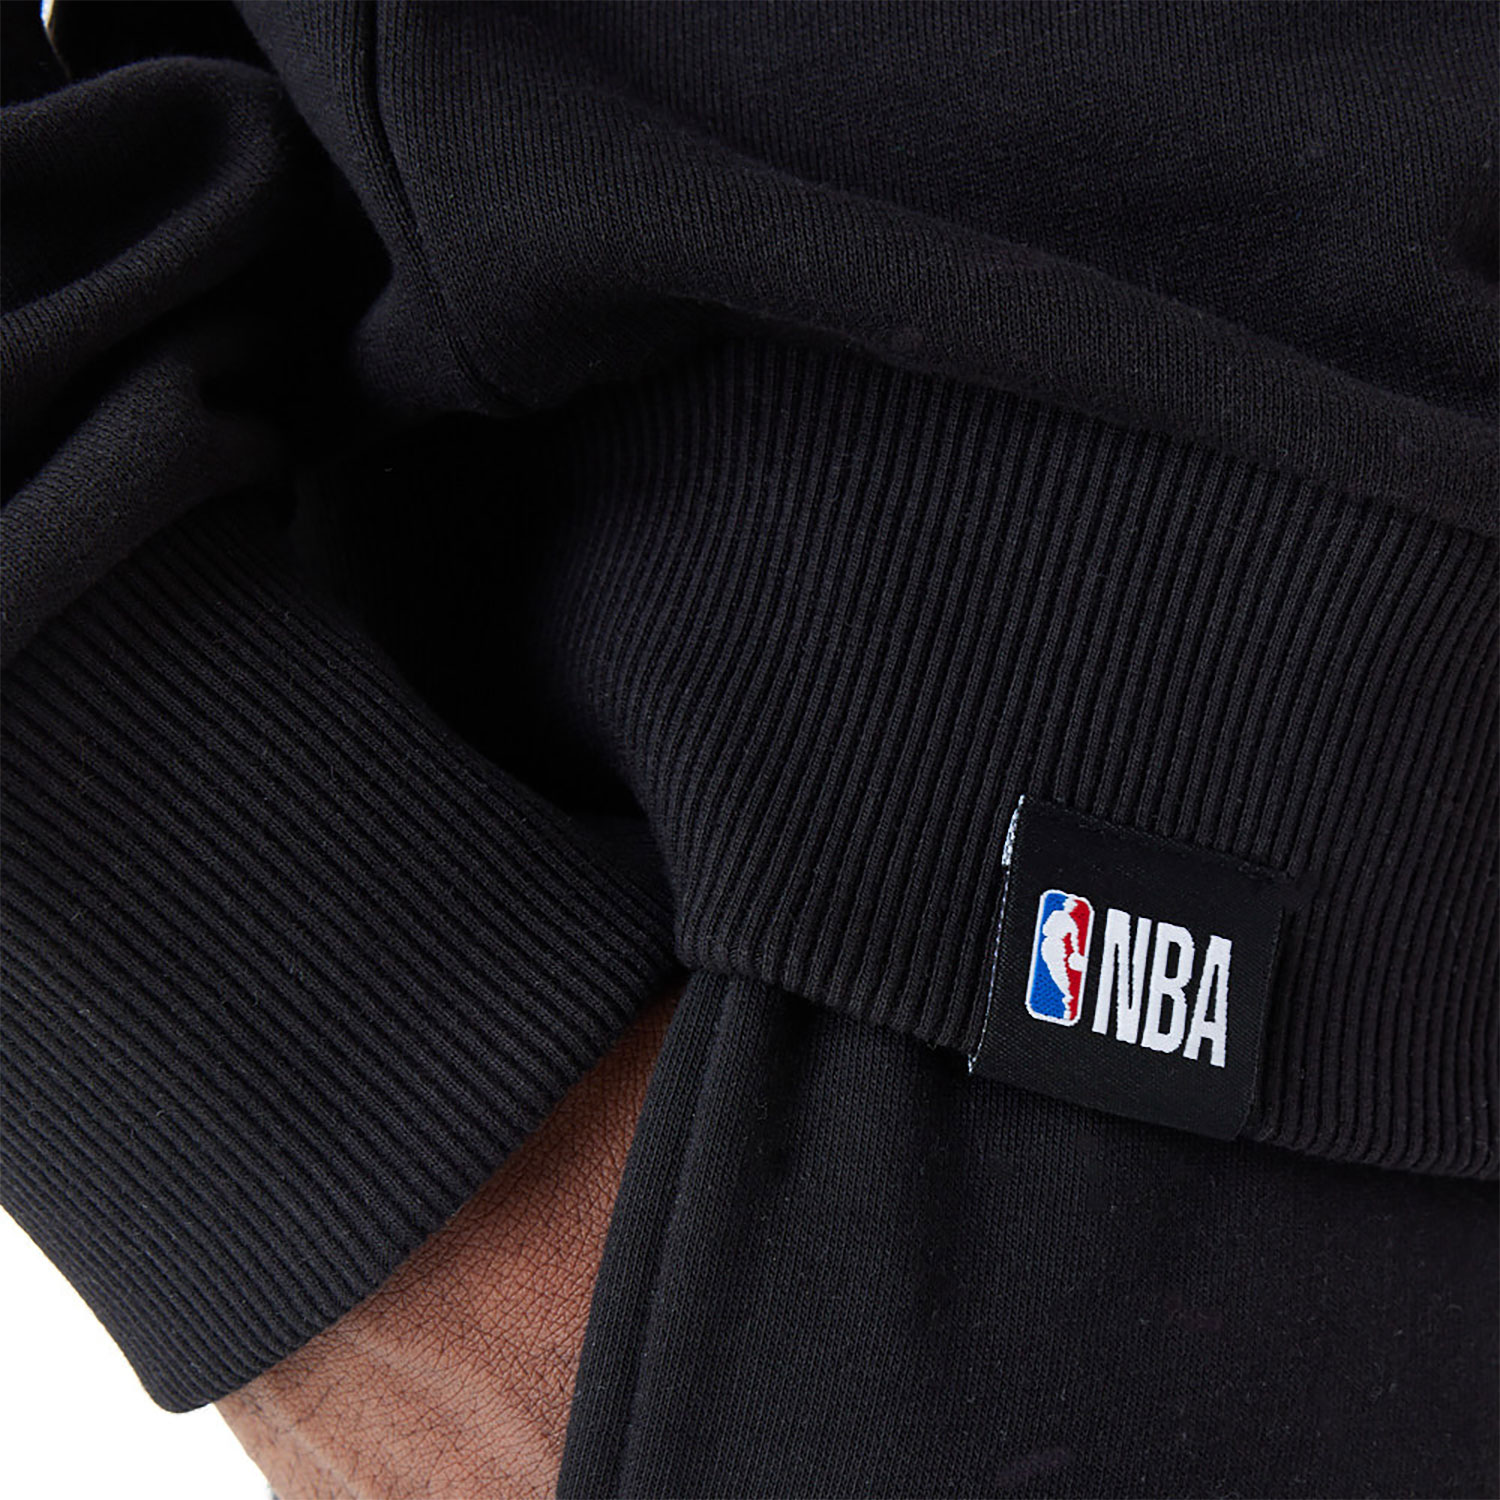 Chicago Bulls NBA Arch Graphic Black Oversized Crew Neck Sweatshirt